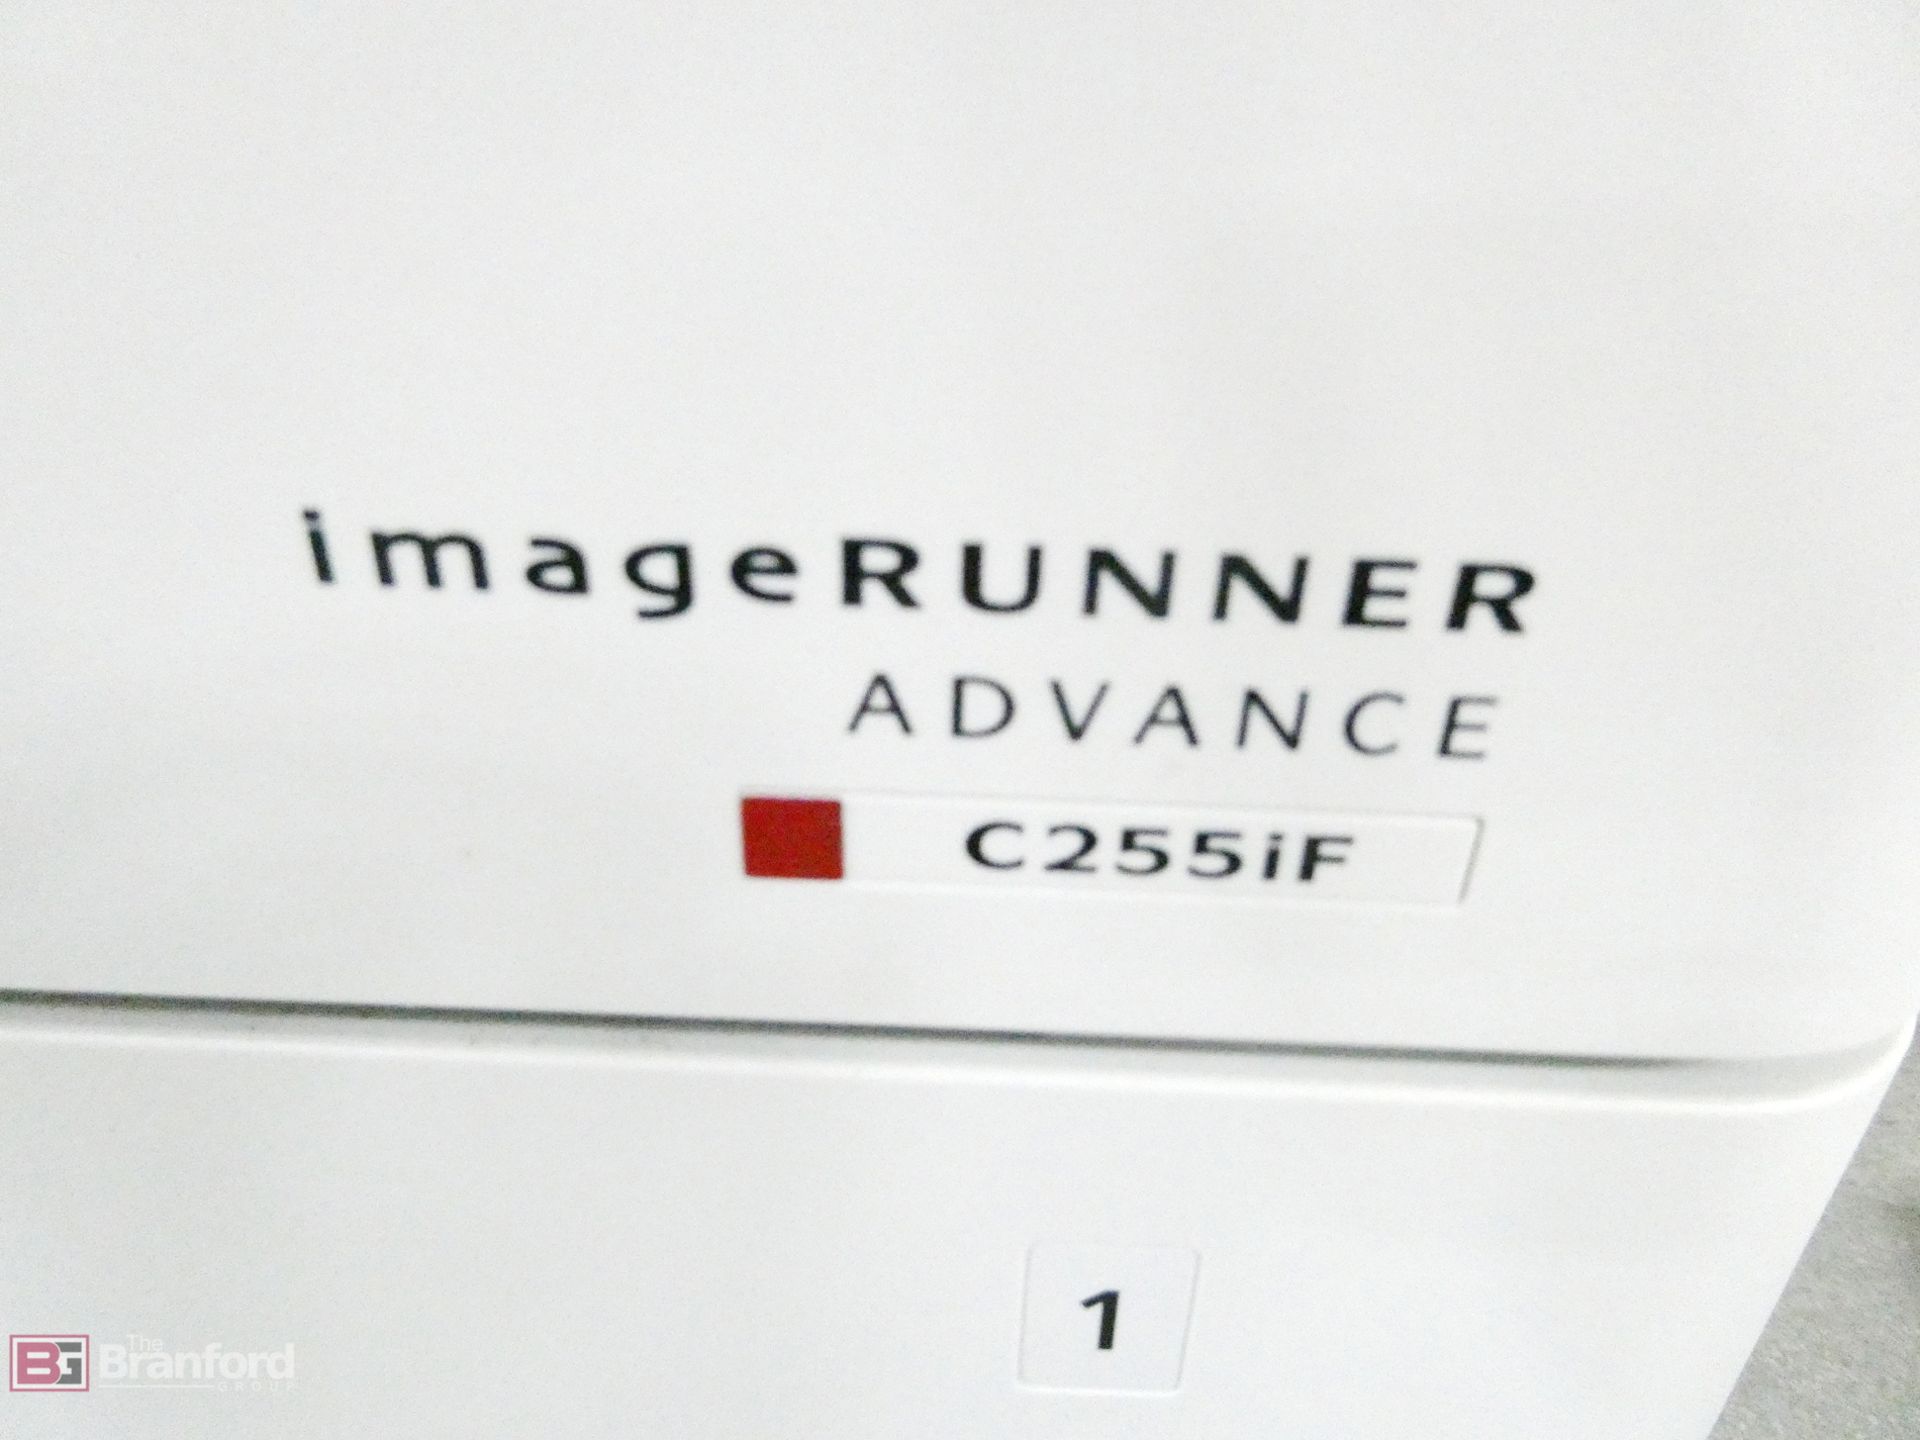 Canon Model C255IF ImageRunner Advanced, Multifunction Printer - Image 6 of 7